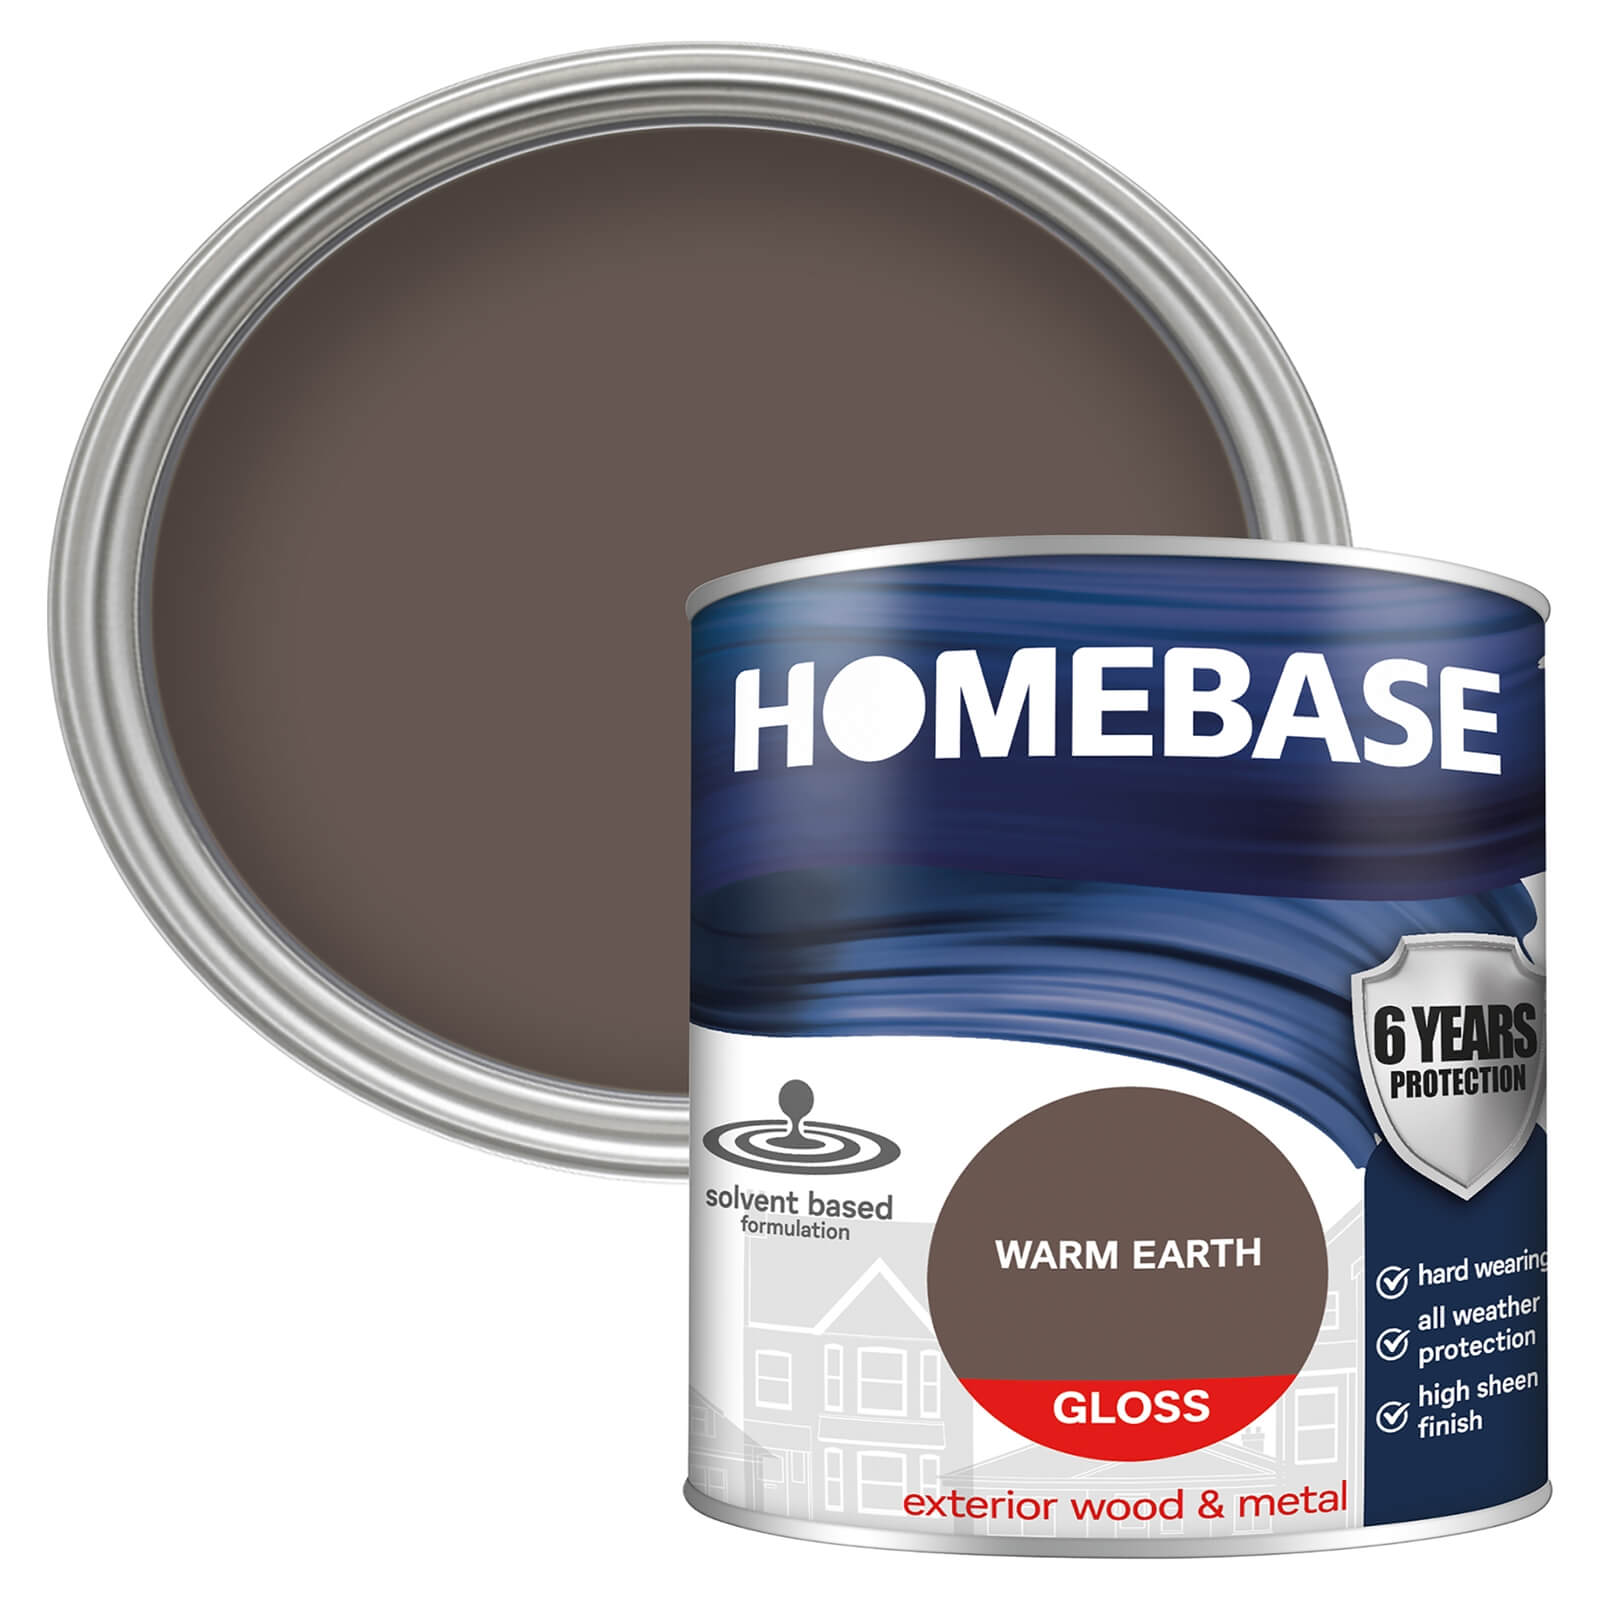 Homebase Exterior Gloss Paint - Warm Earth 750ml